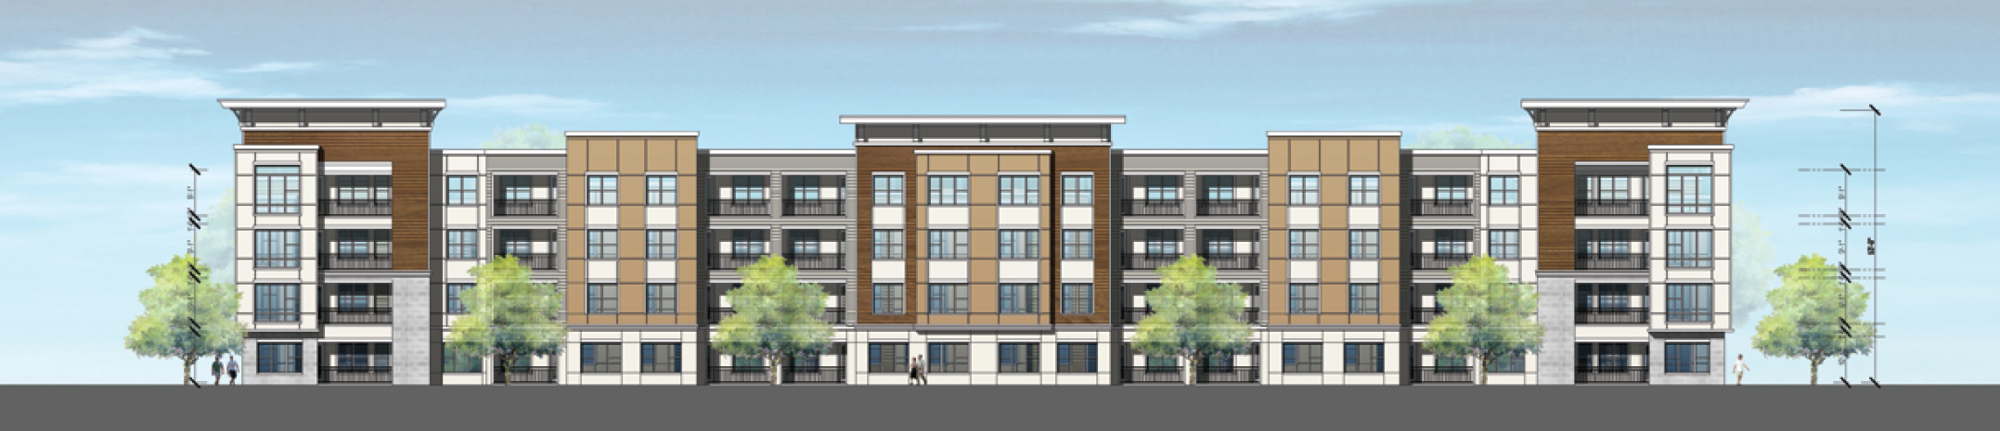 Davis Development of Stockbridge, Georgia, plans to start construction of 289 luxury apartments in early 2018.